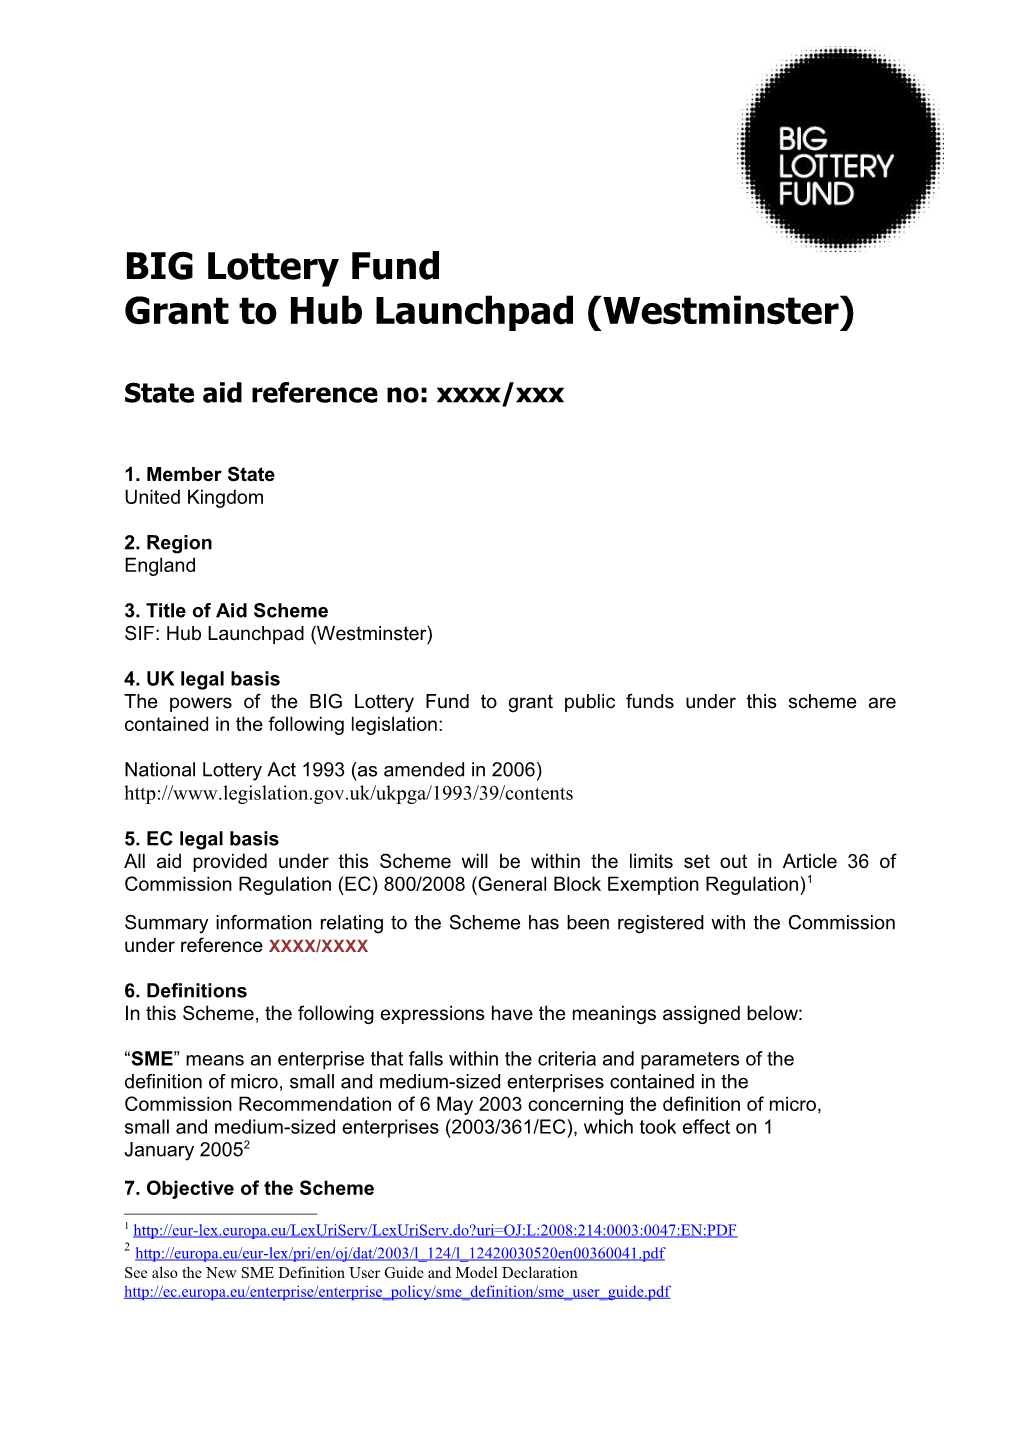 BIG Lottery Fund Grant to Hub Launchpad